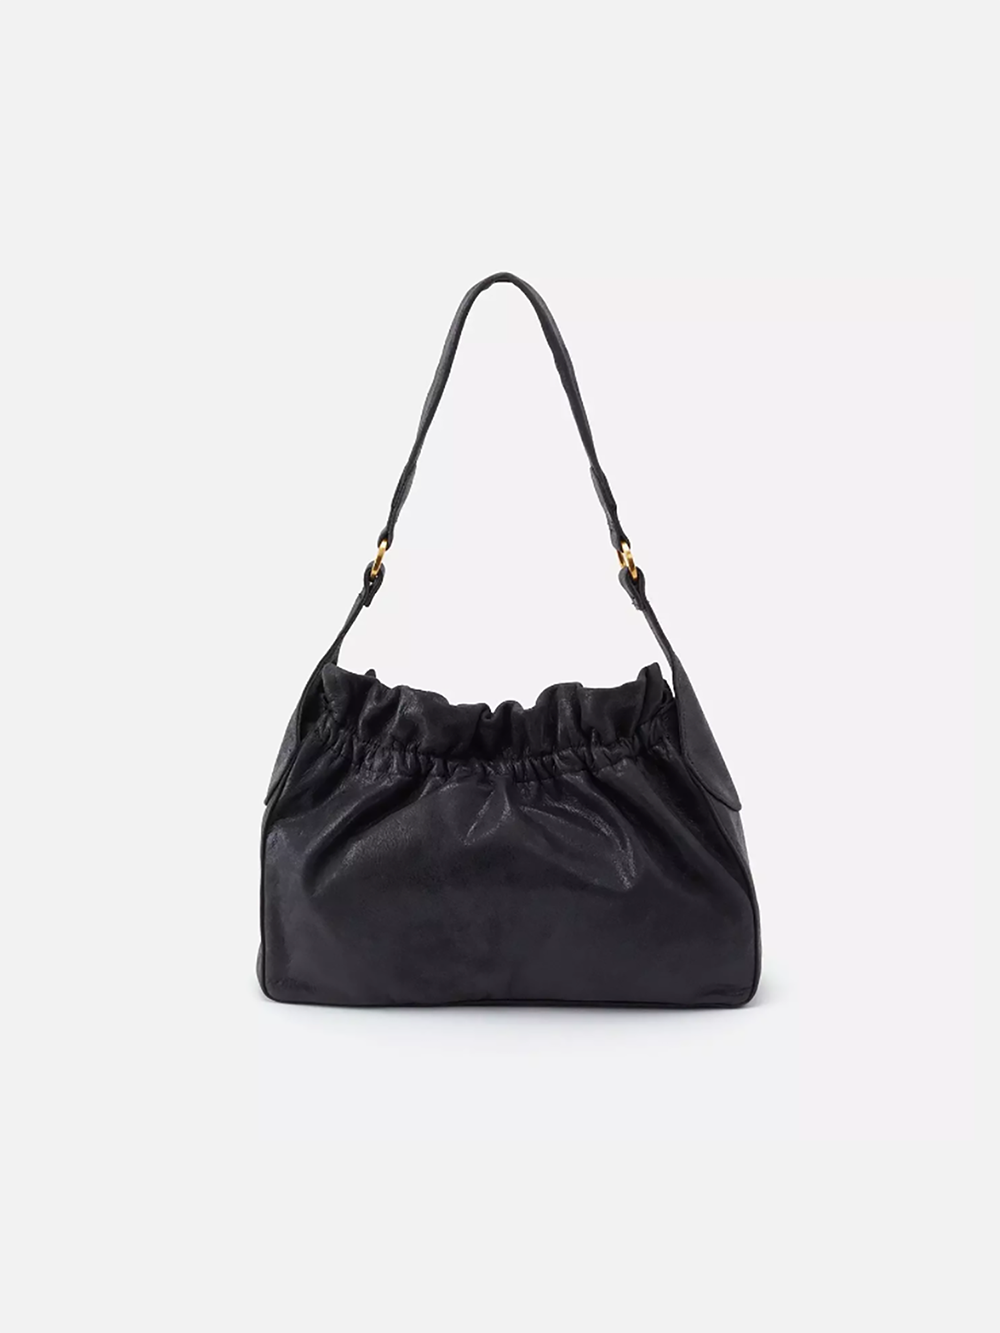 hobo gather shoulder bag in buffed leather black-front